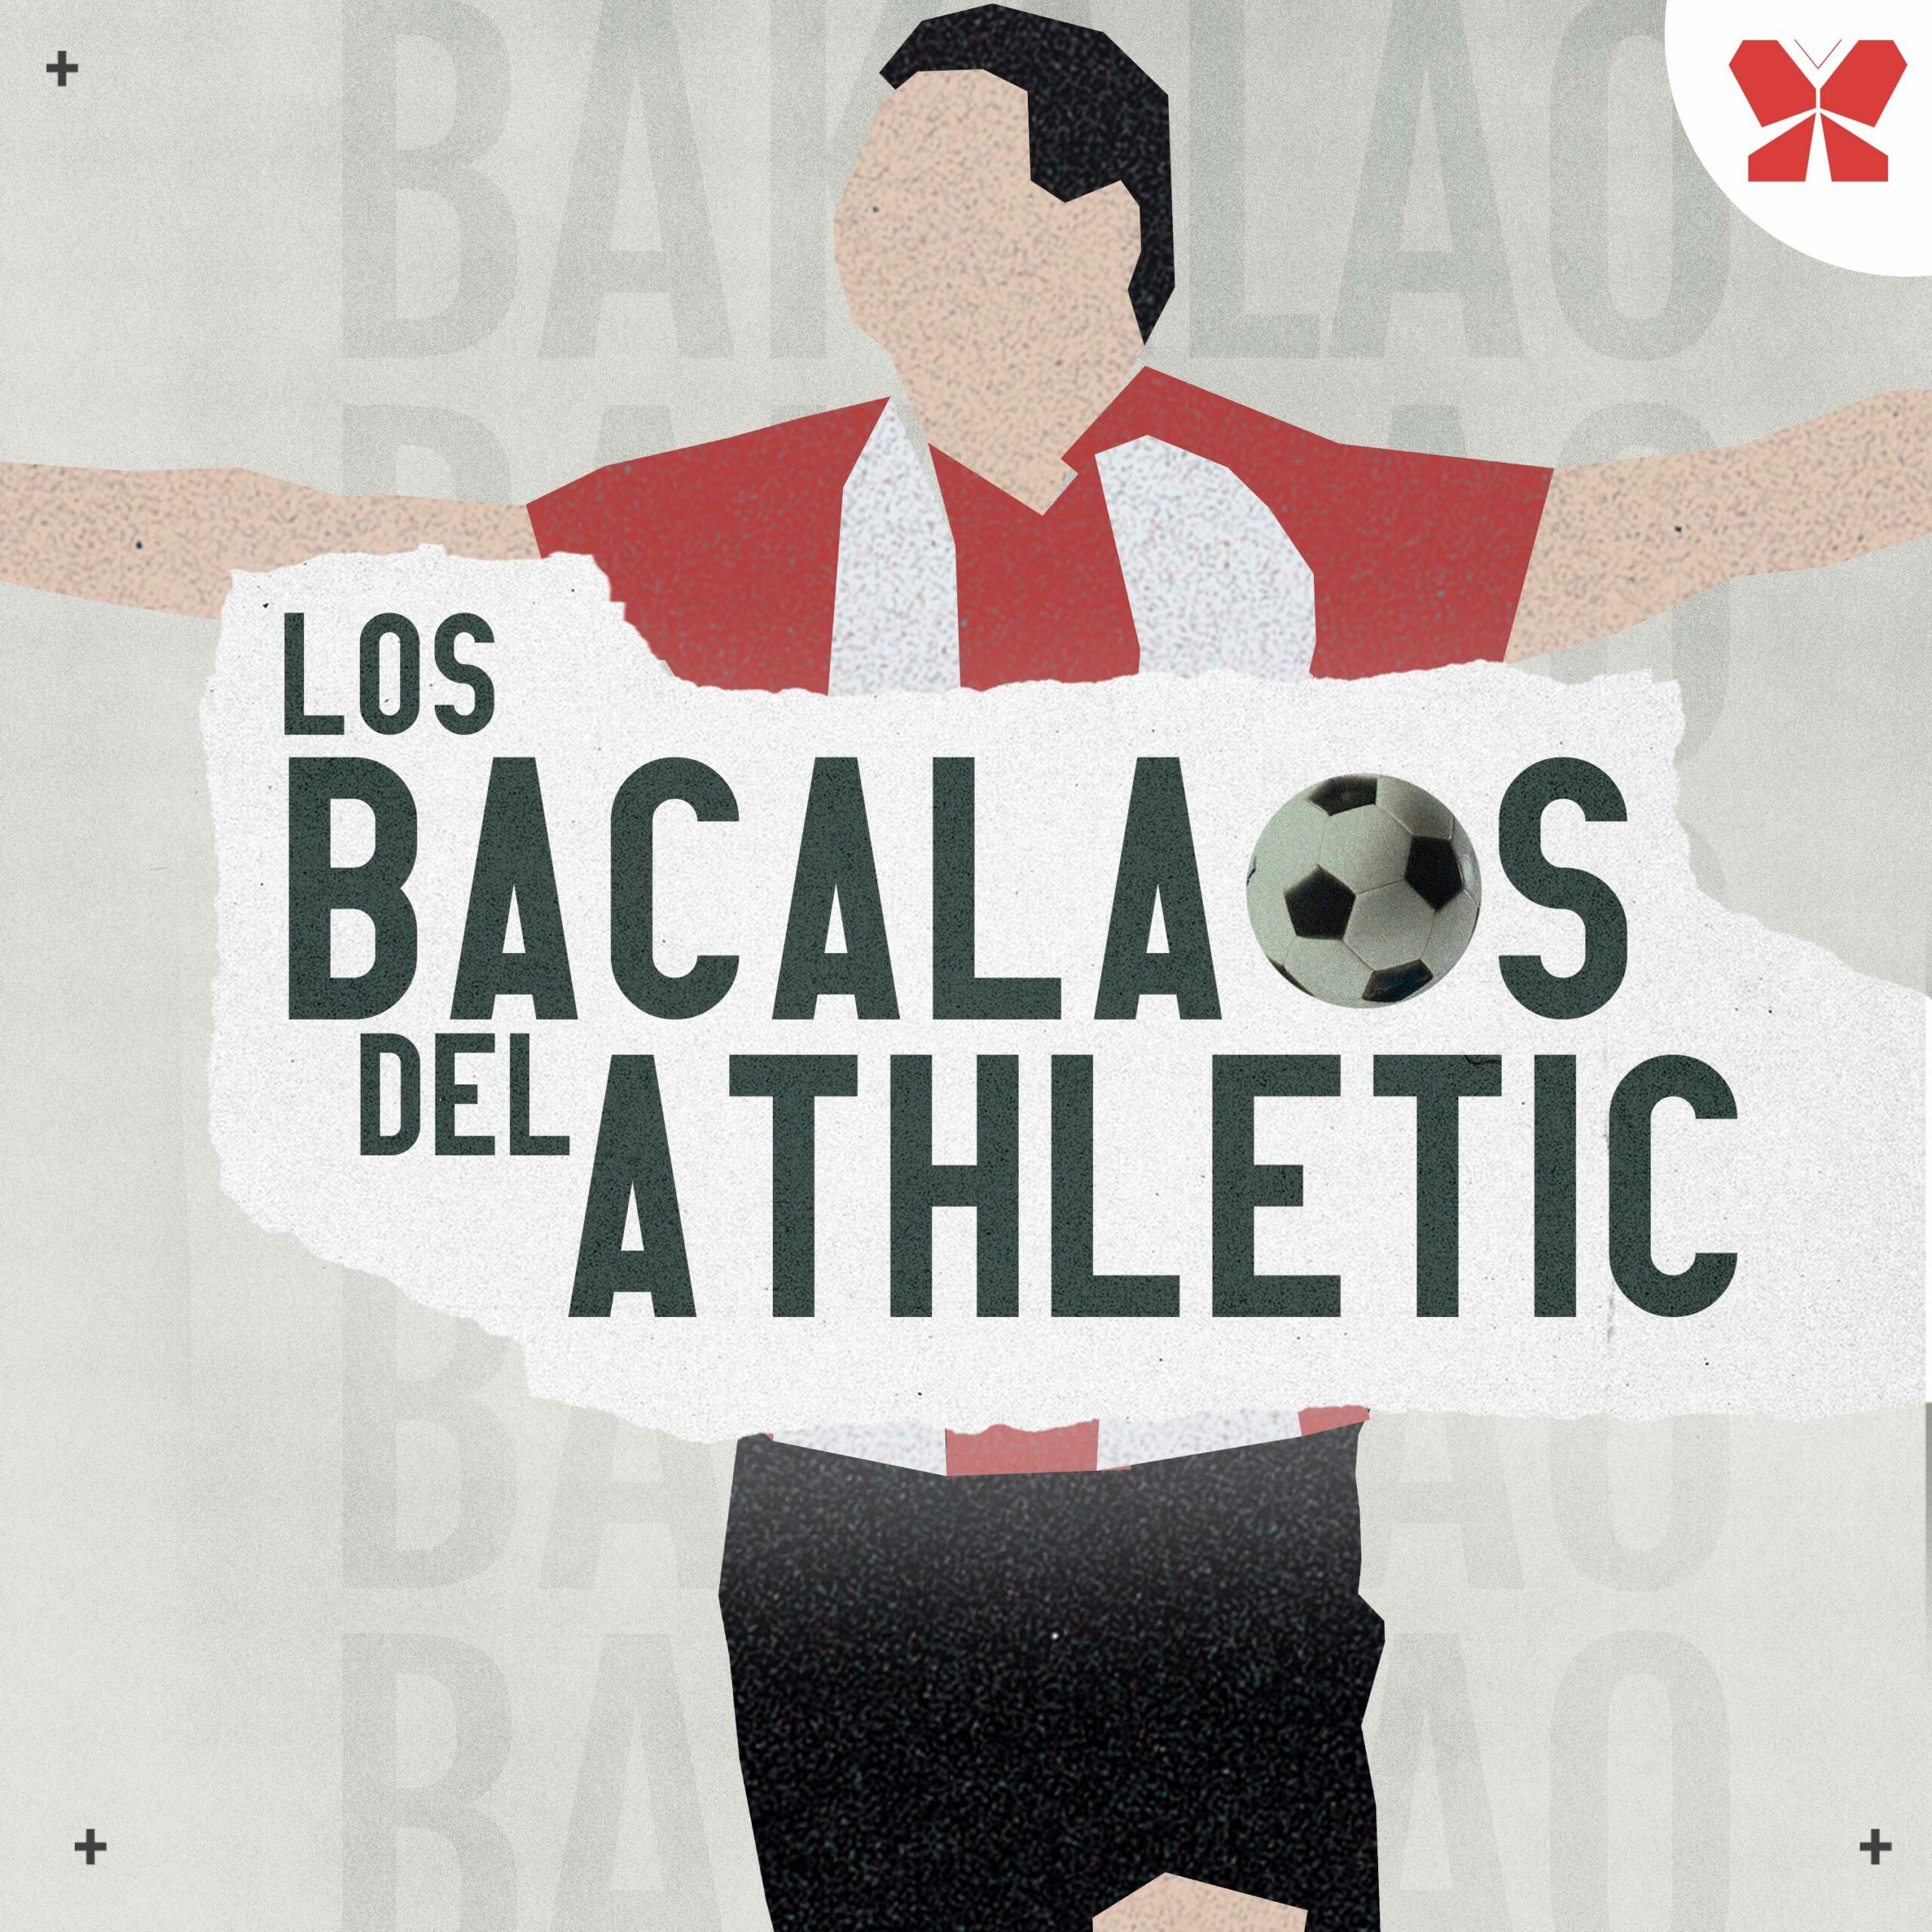 ⚽ Tercer bacalao de Guruzeta de esta temporada | Girona FC 2-1 Athletic Club